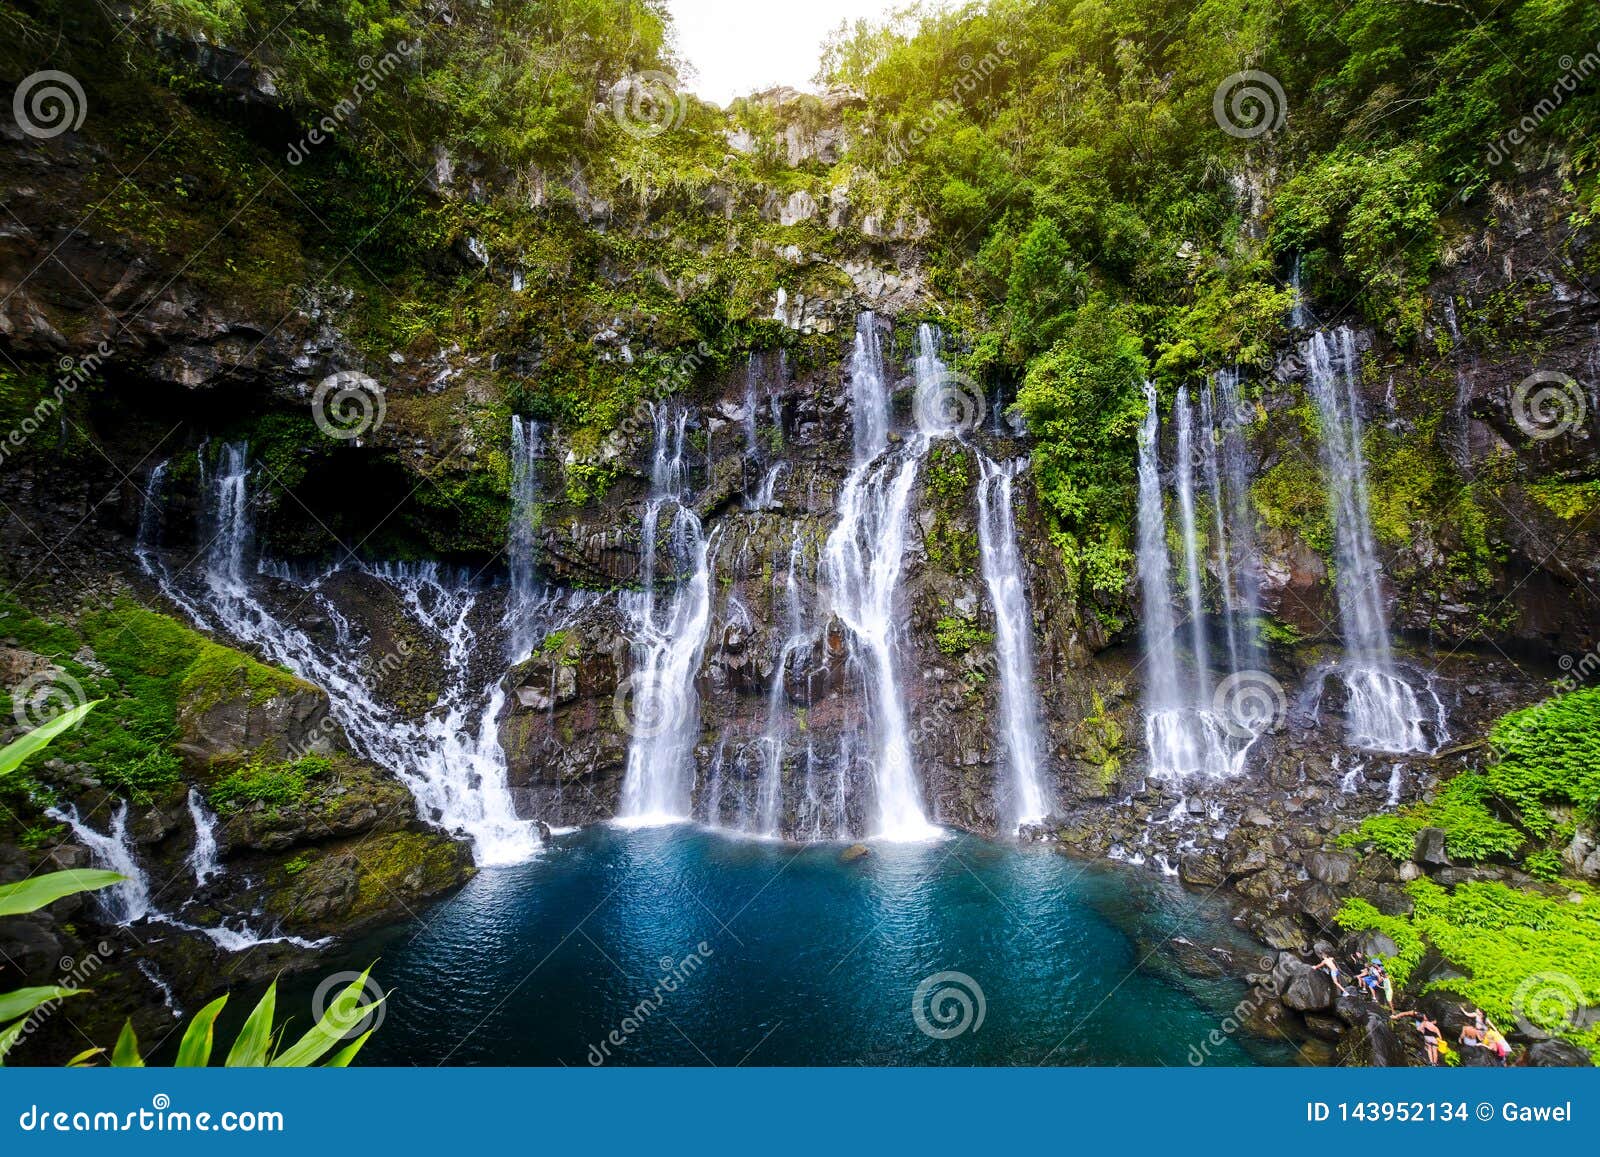 waterfall of grand galet, langevin, reunion island